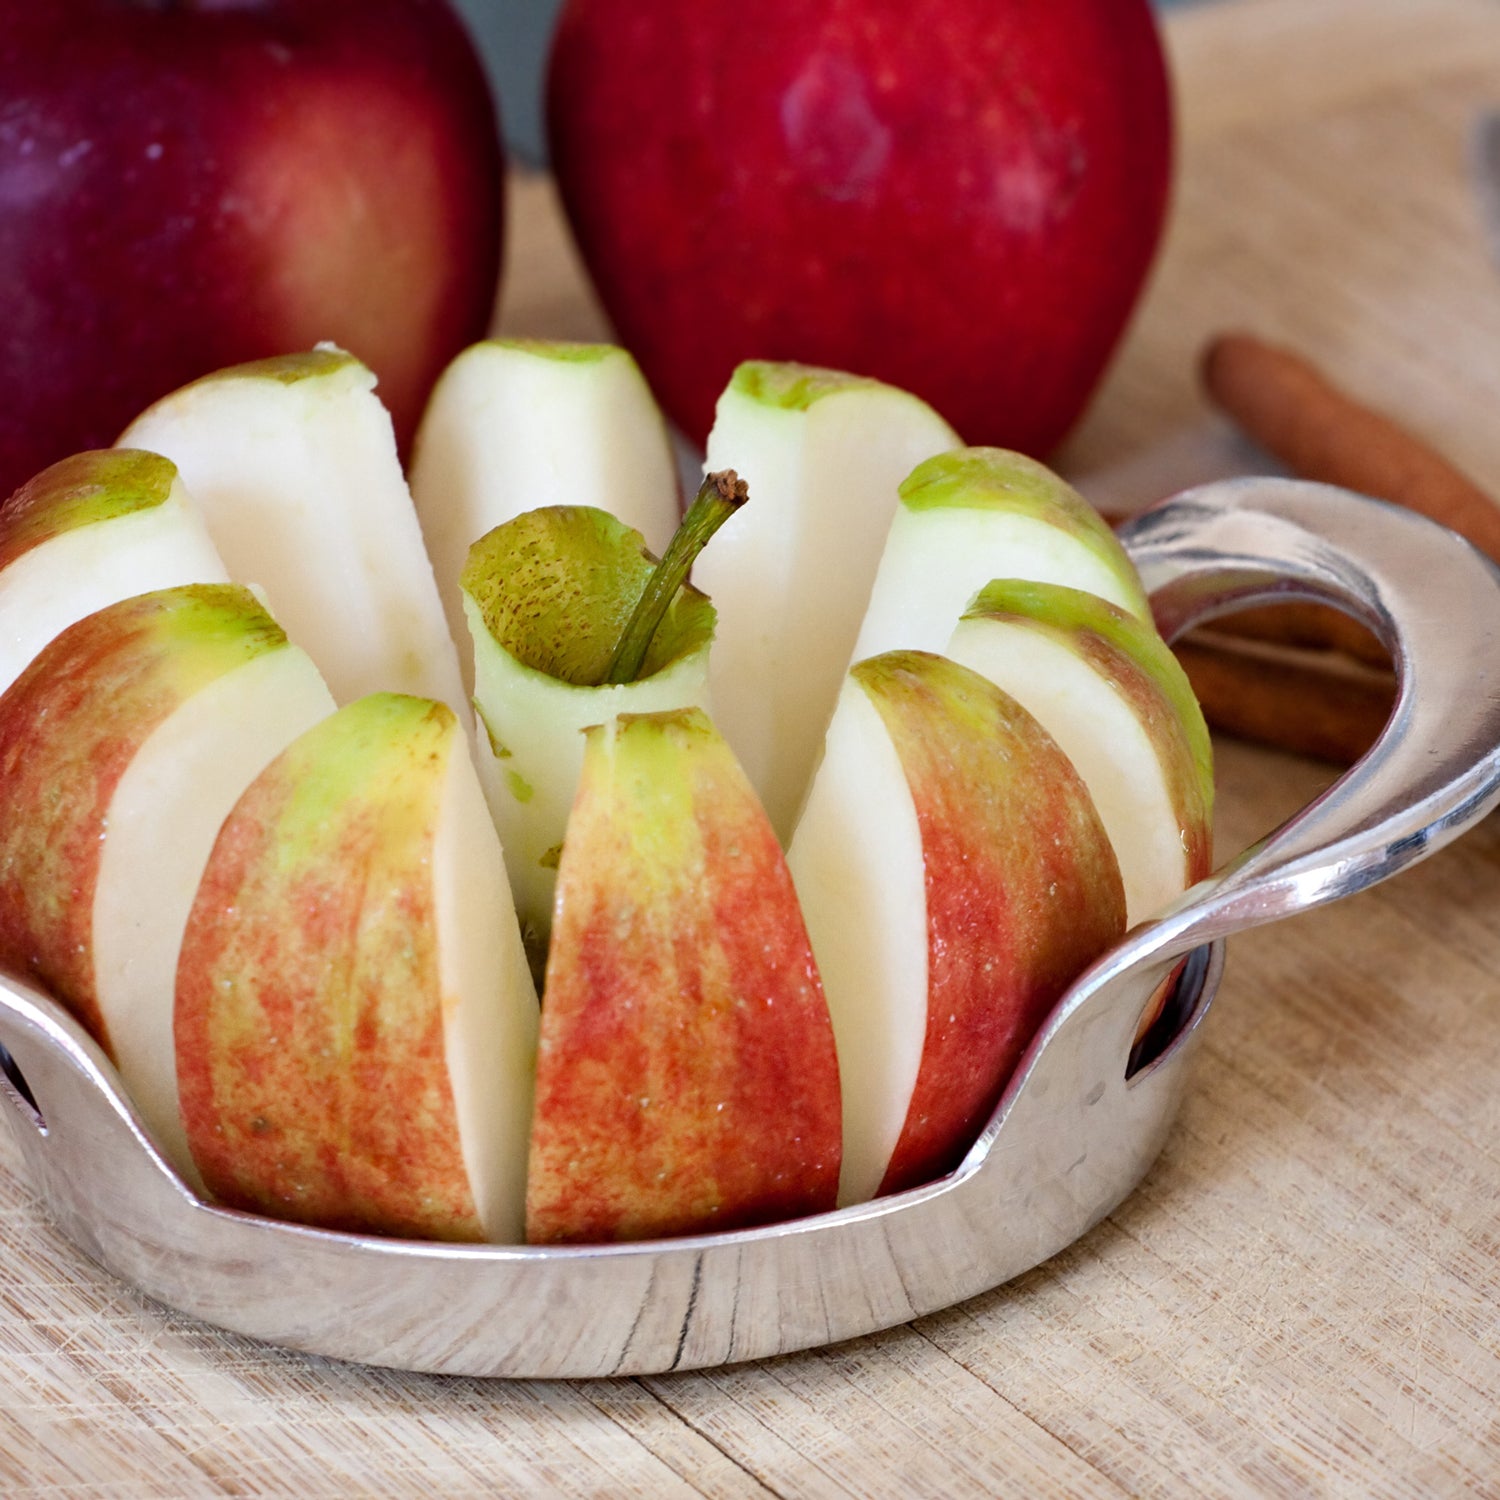 Sliced fresh apples - inspiration for our "Orchard Apple" wax melt fragrance